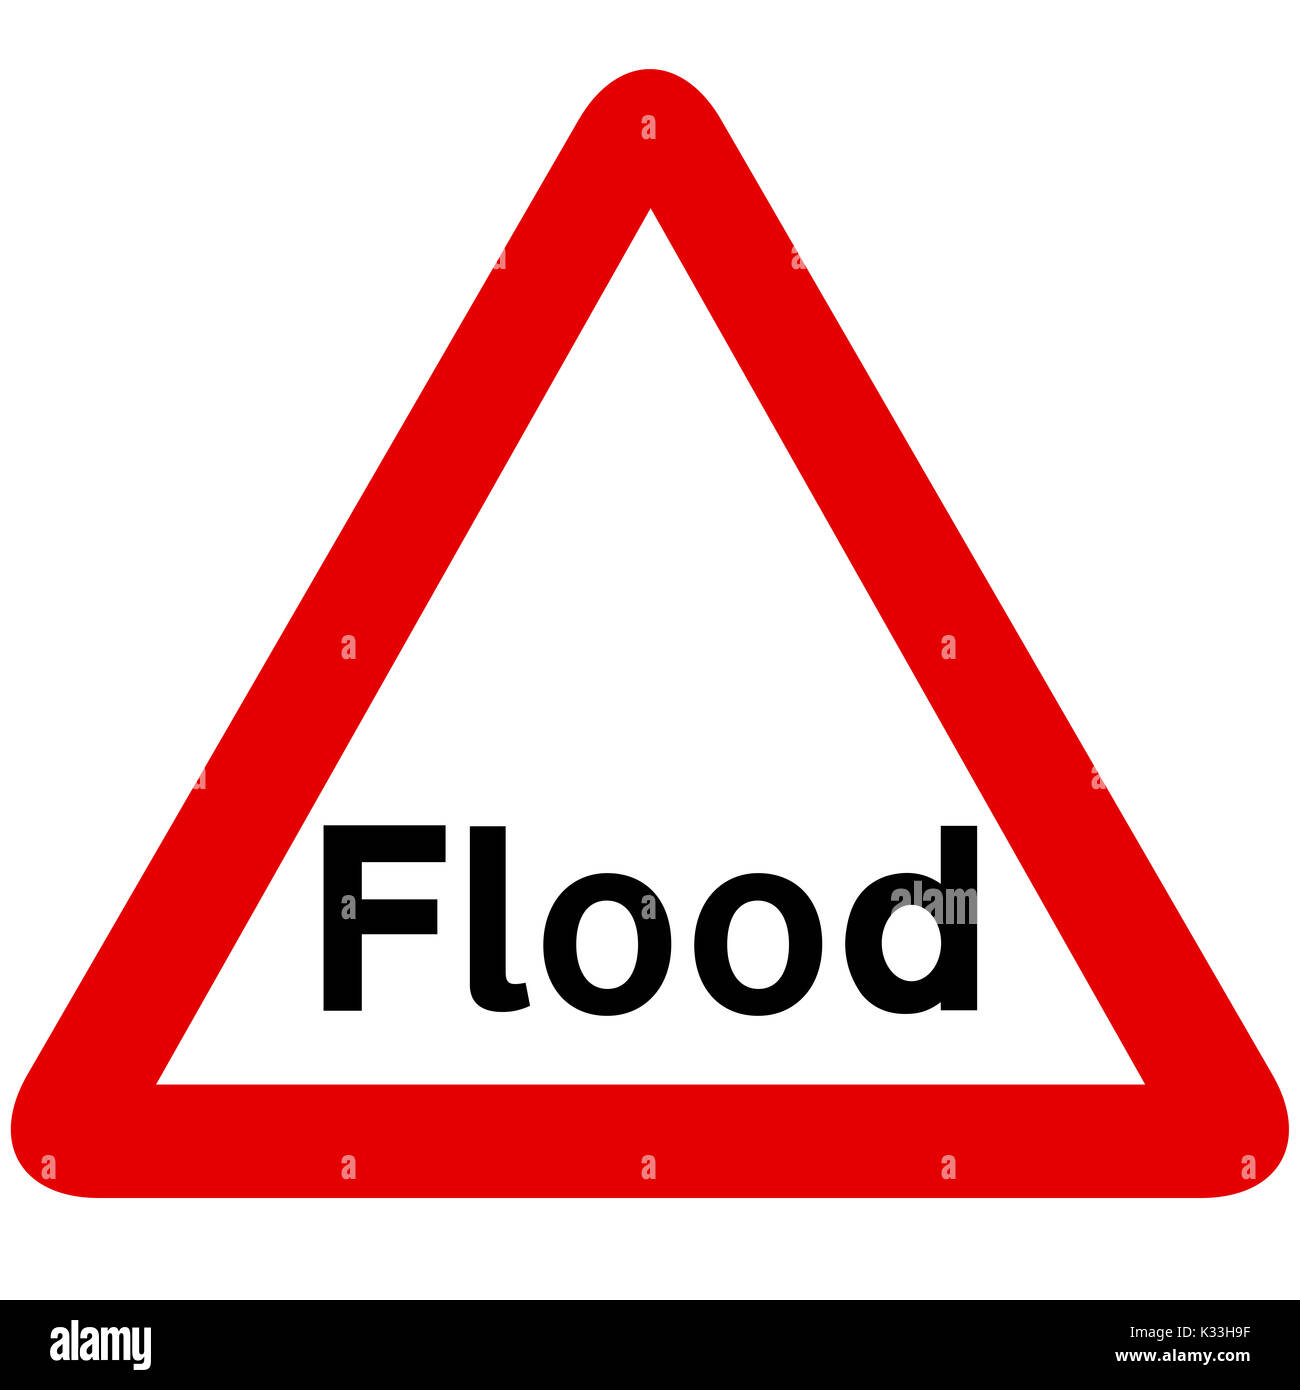 Flood road sign on white background Stock Photo